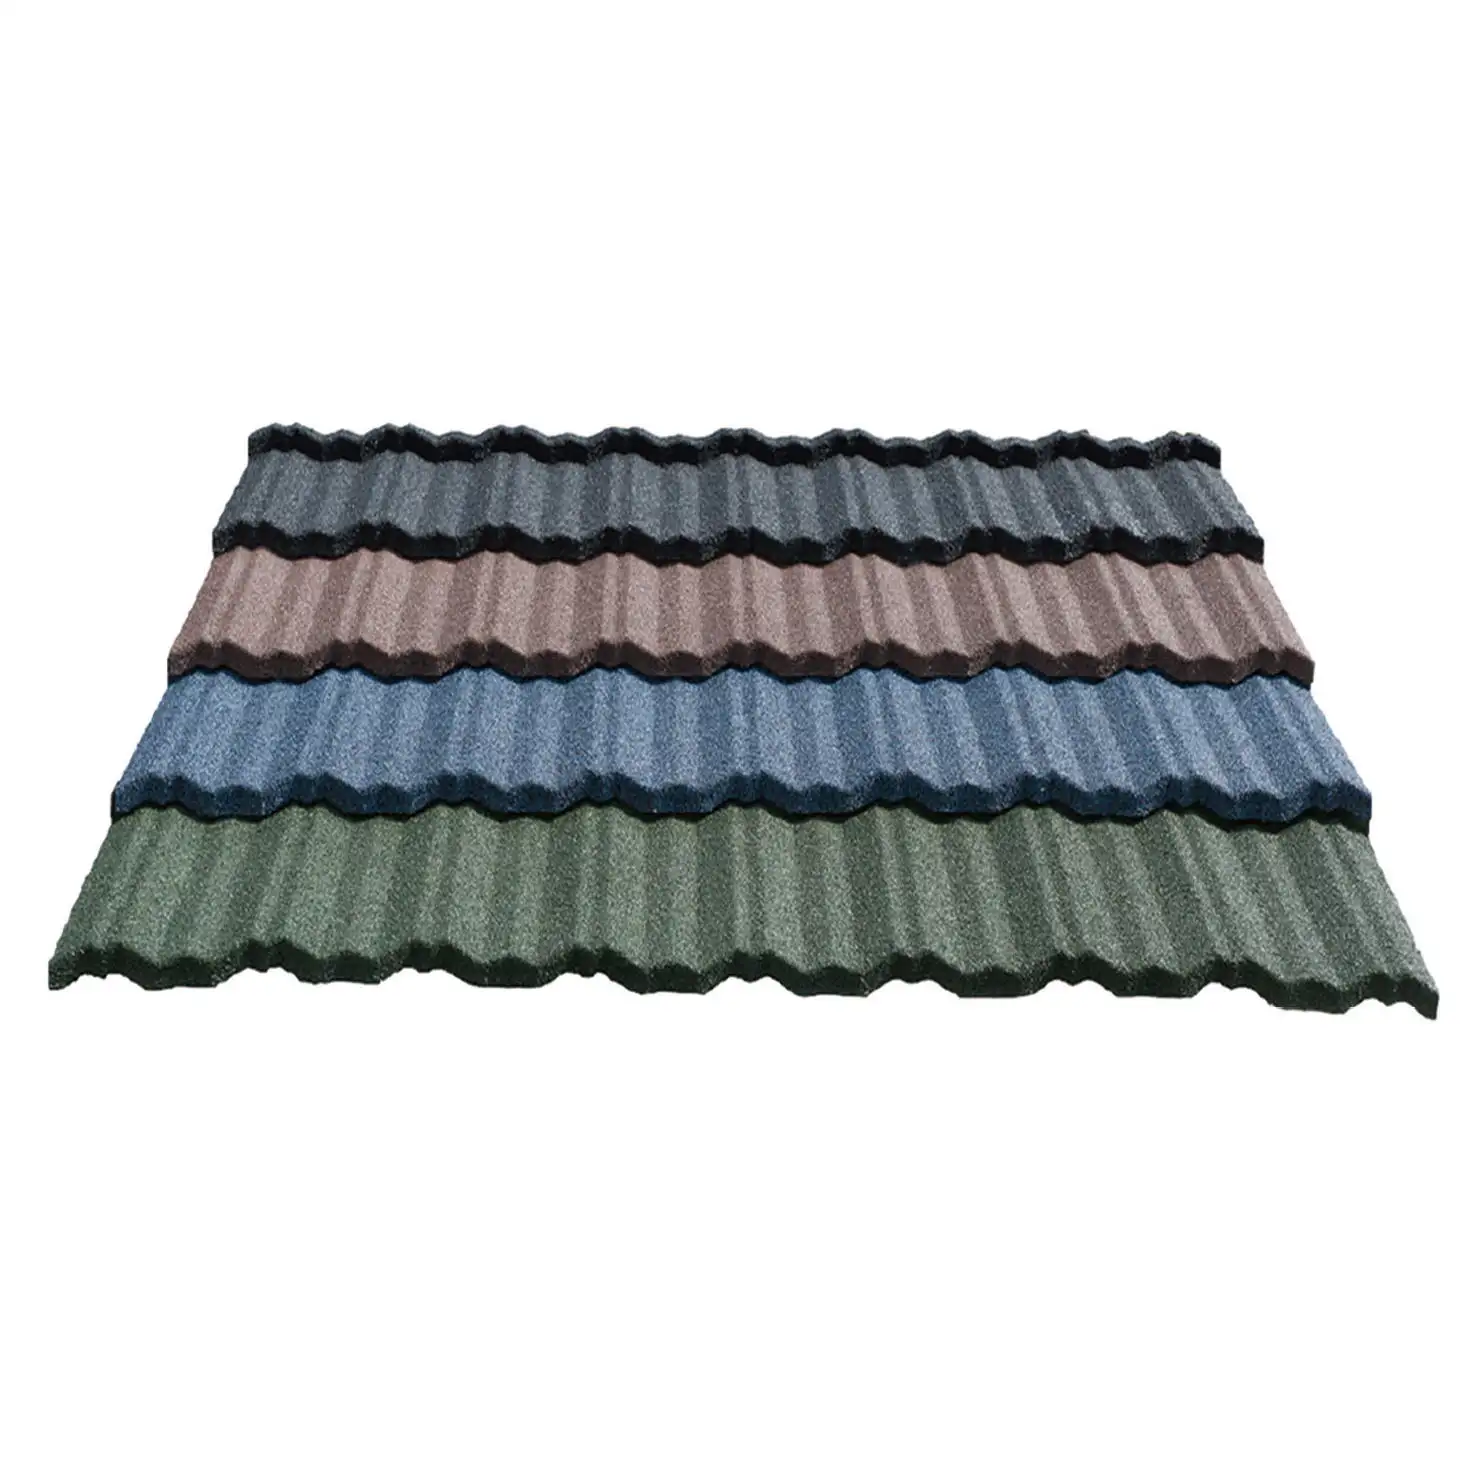 Industrial Design Nosen Colored Stone Coated Metal Tiles Lightweight Aluminum Roofing Materials House Villa Exterior Metal Roofi